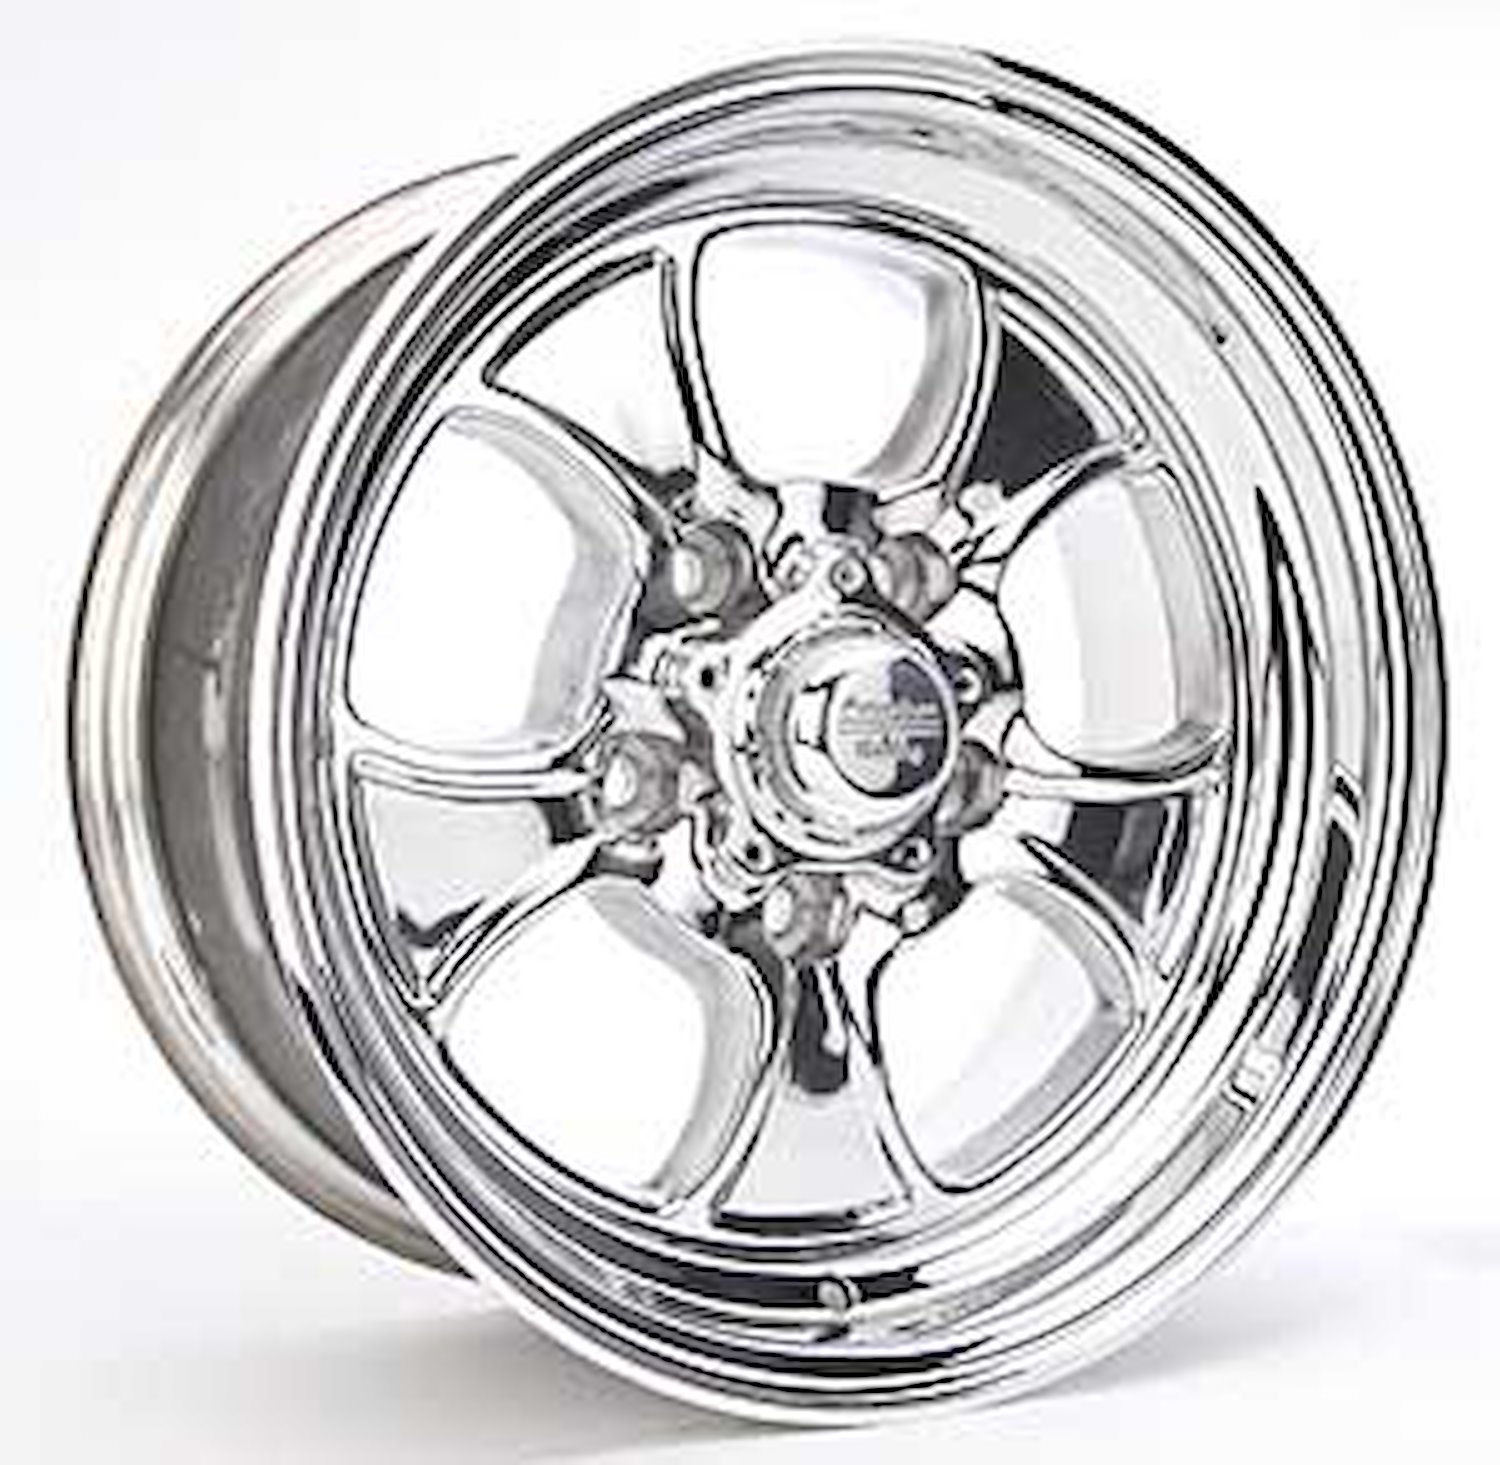 Polished Hopster Wheel Size: 15 x 10" Bolt Circle: 5 x 4-1/2" Rear Spacing: 3-3/4"